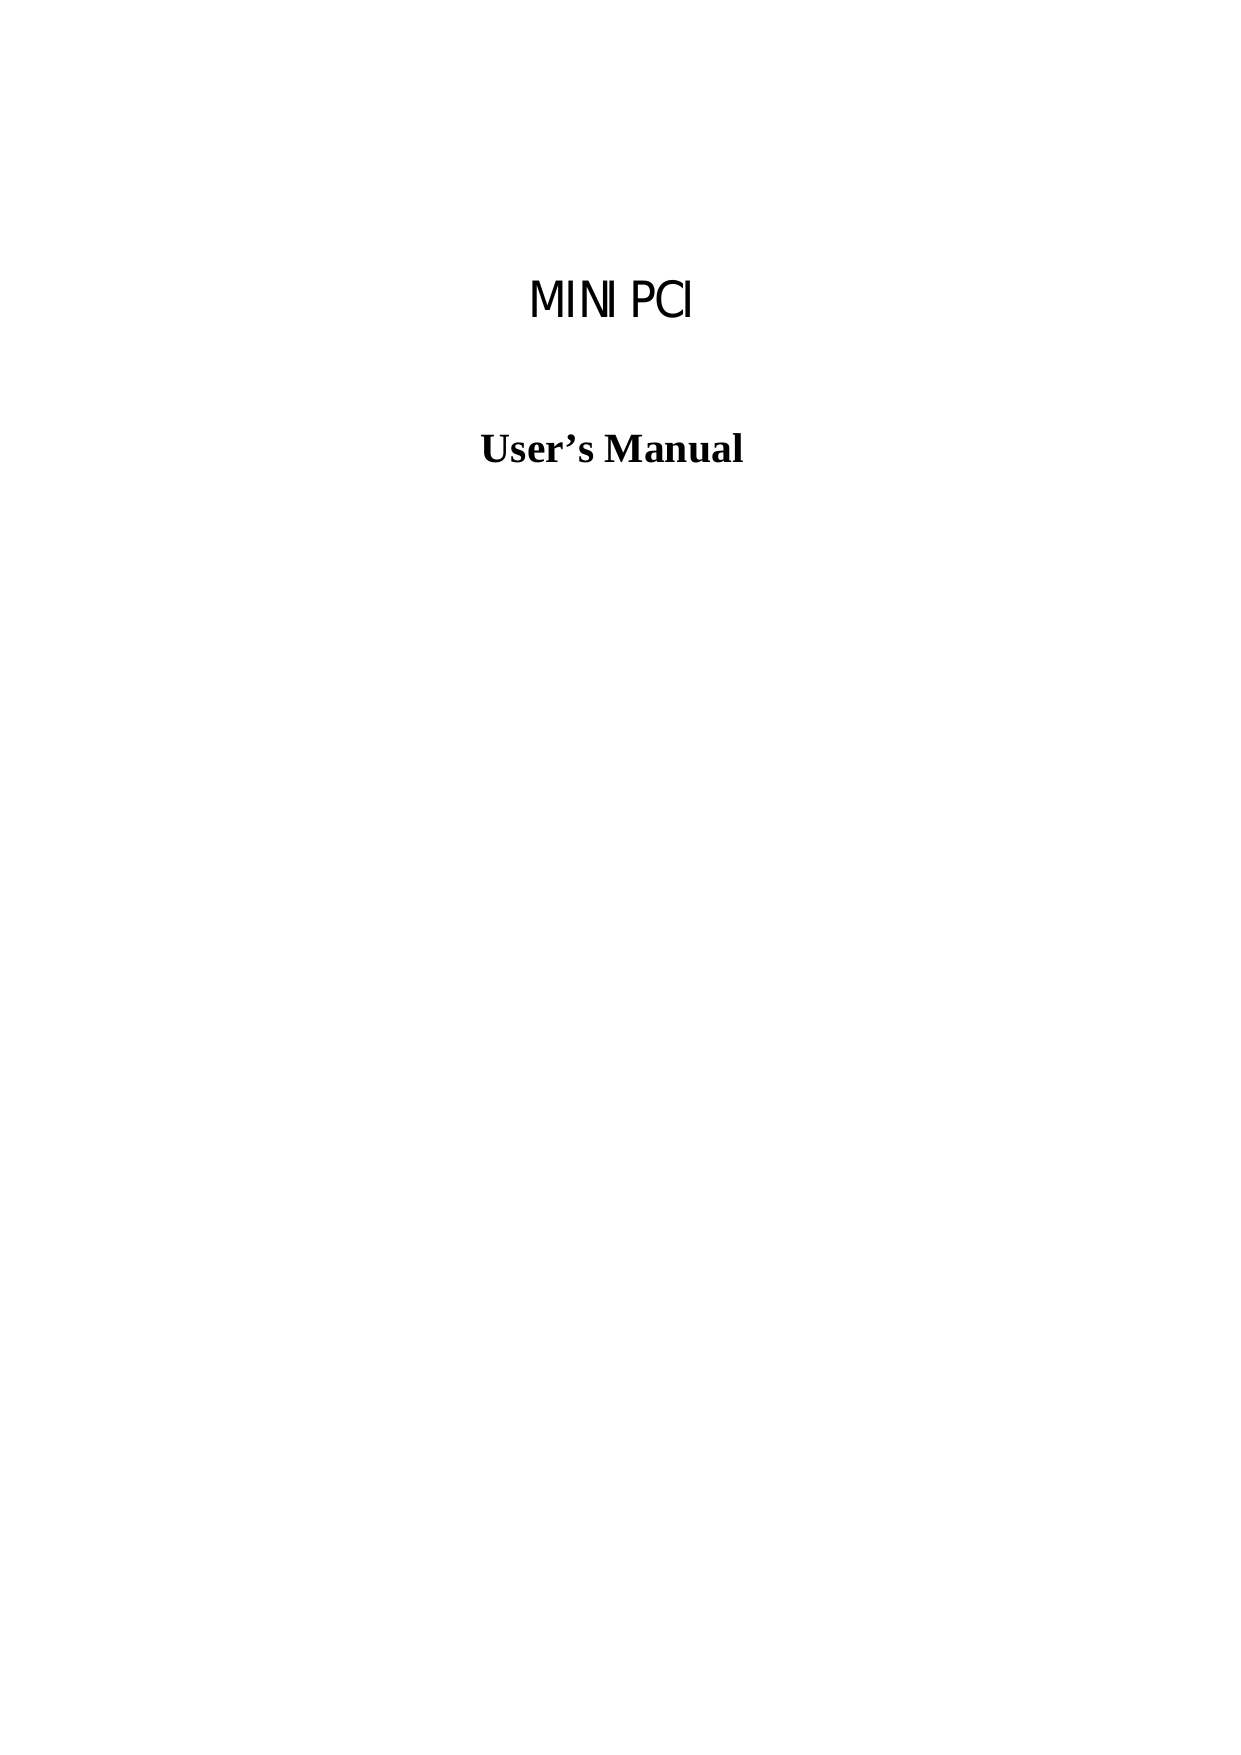     MINI PCI    User’s Manual 